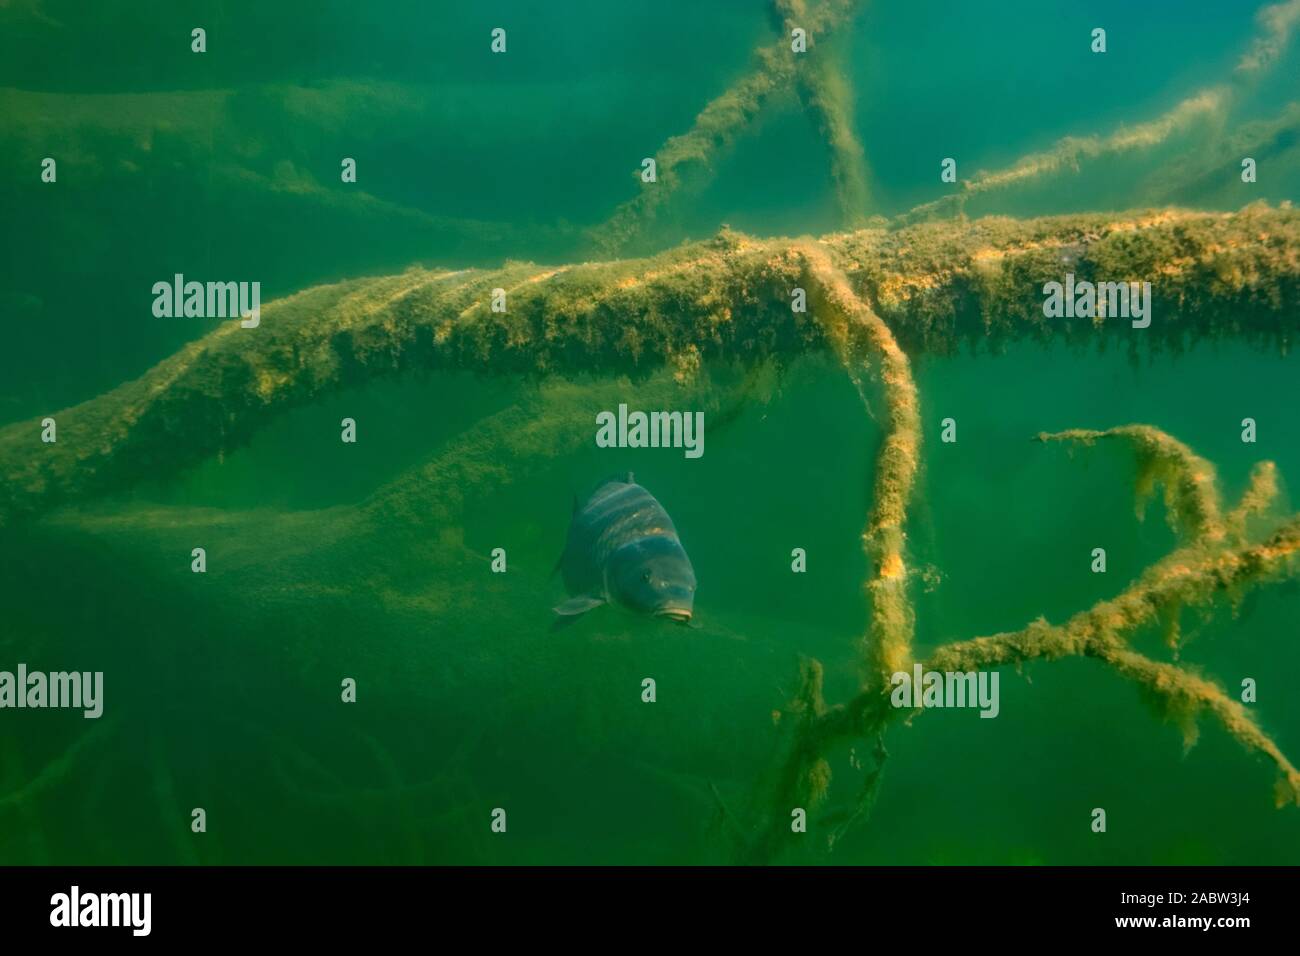 Underwater photo of the common carp or European carp (Cyprinus carpio) in Soderica Lake, Croatia Stock Photo